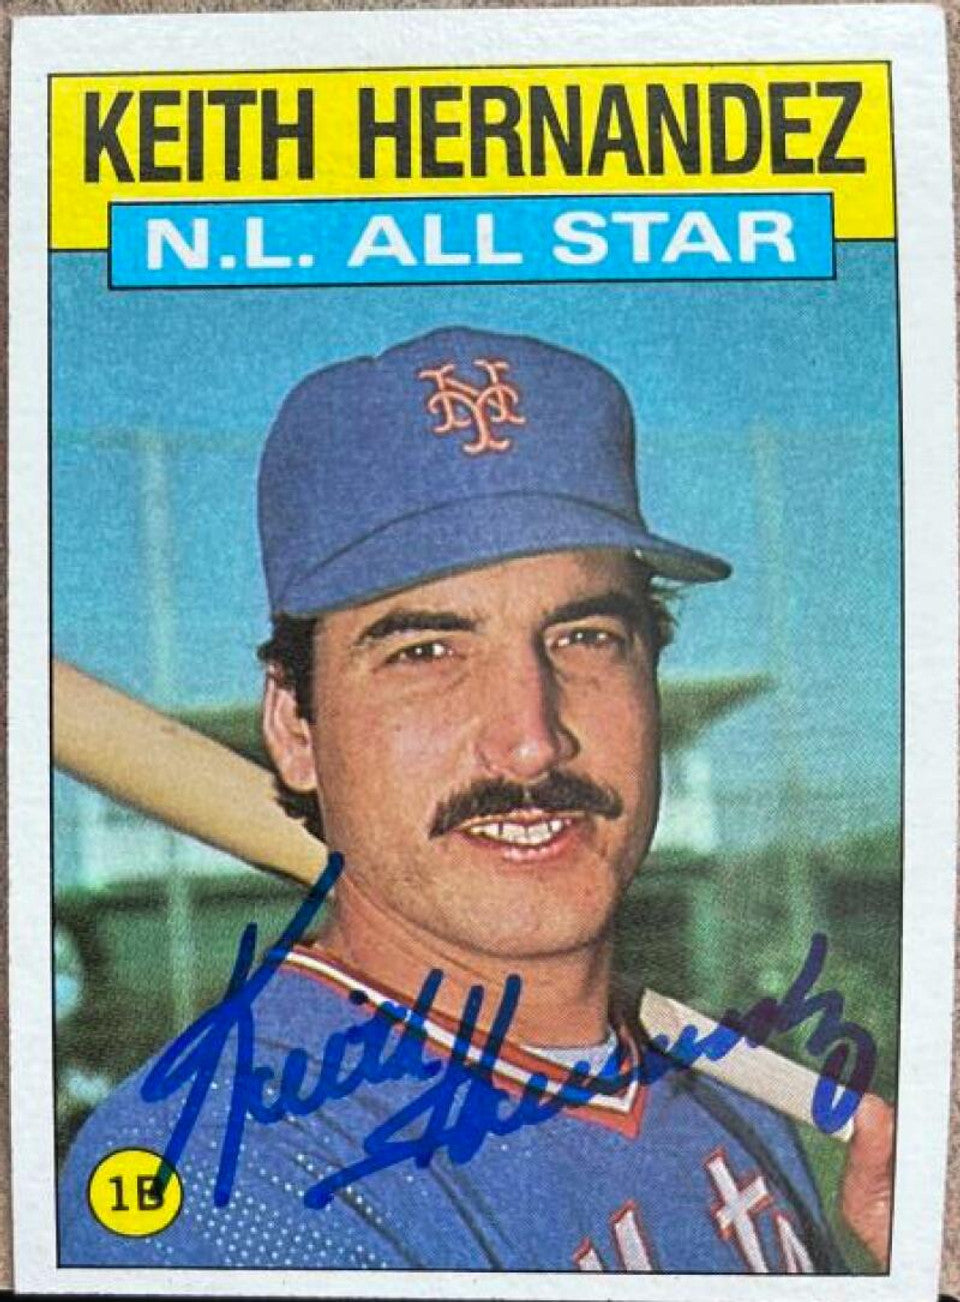 Keith Hernandez Signed 1986 Topps Baseball Card - New York Mets #701